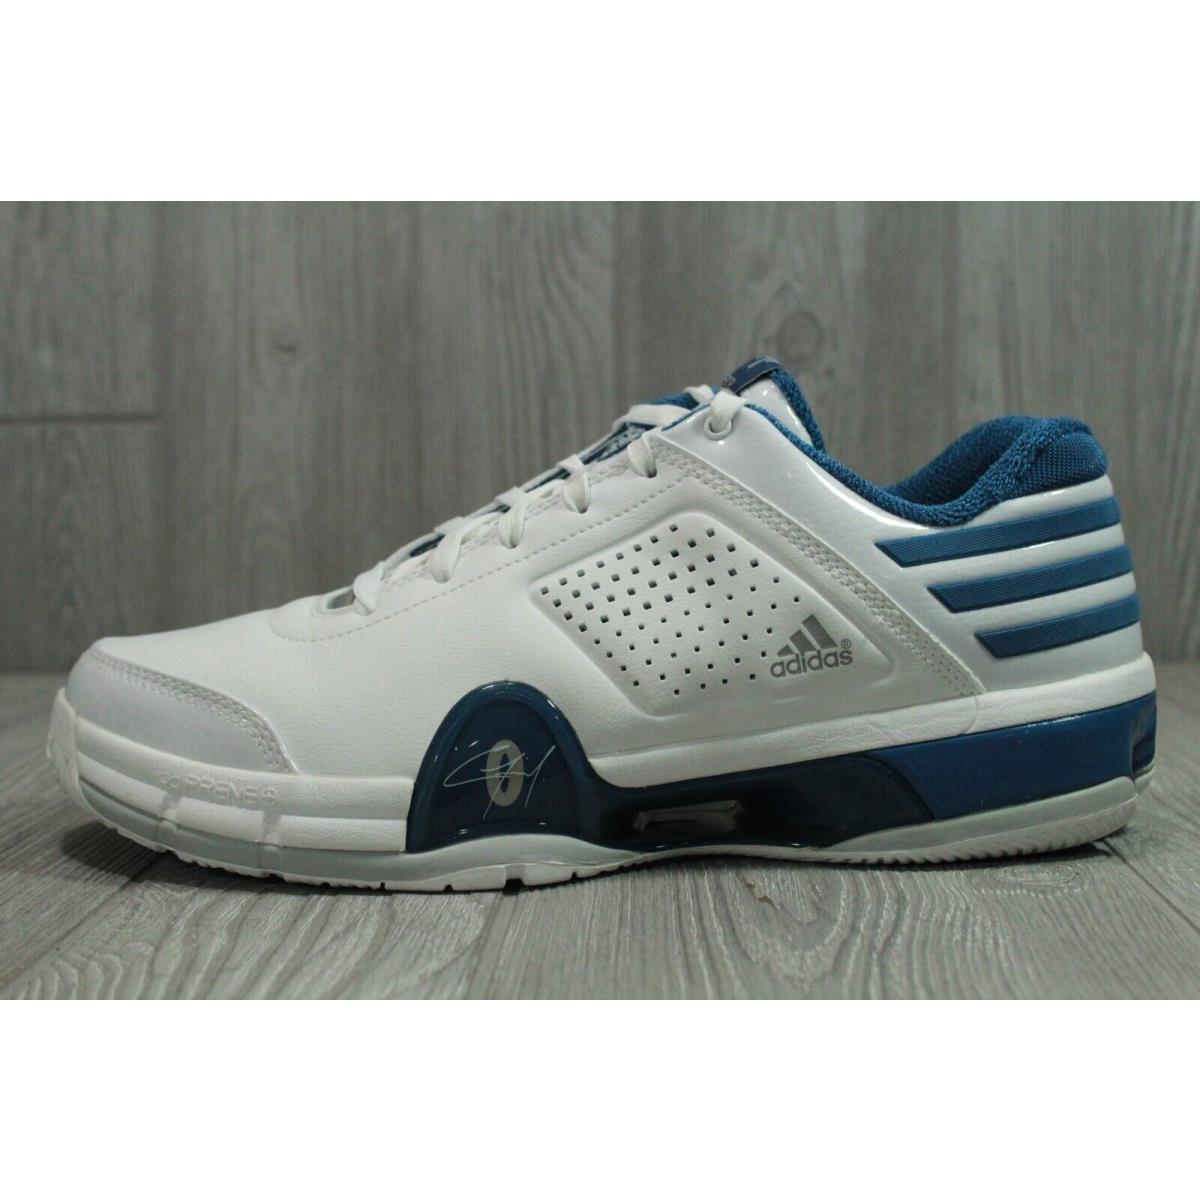 Adidas TS Lightning Creator Low 2008 Blue Shoes Mens Size 10.5 12 Oss